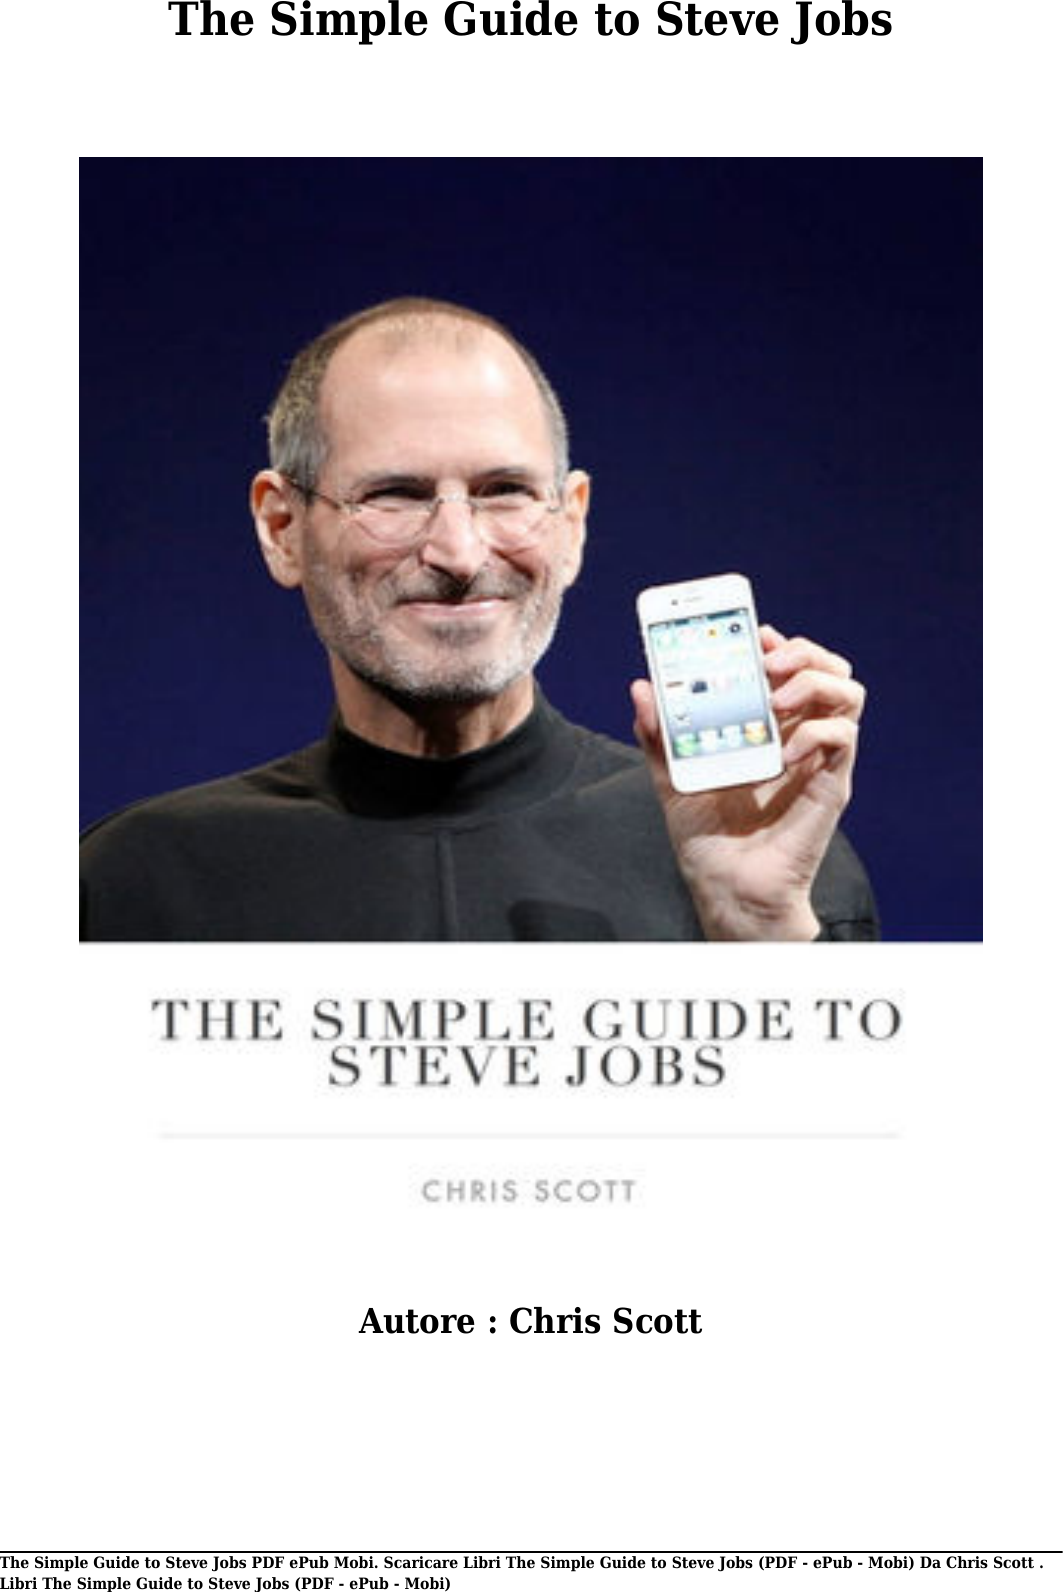 Scaricare Libri Gratis The Simple Guide To Steve Jobs Di